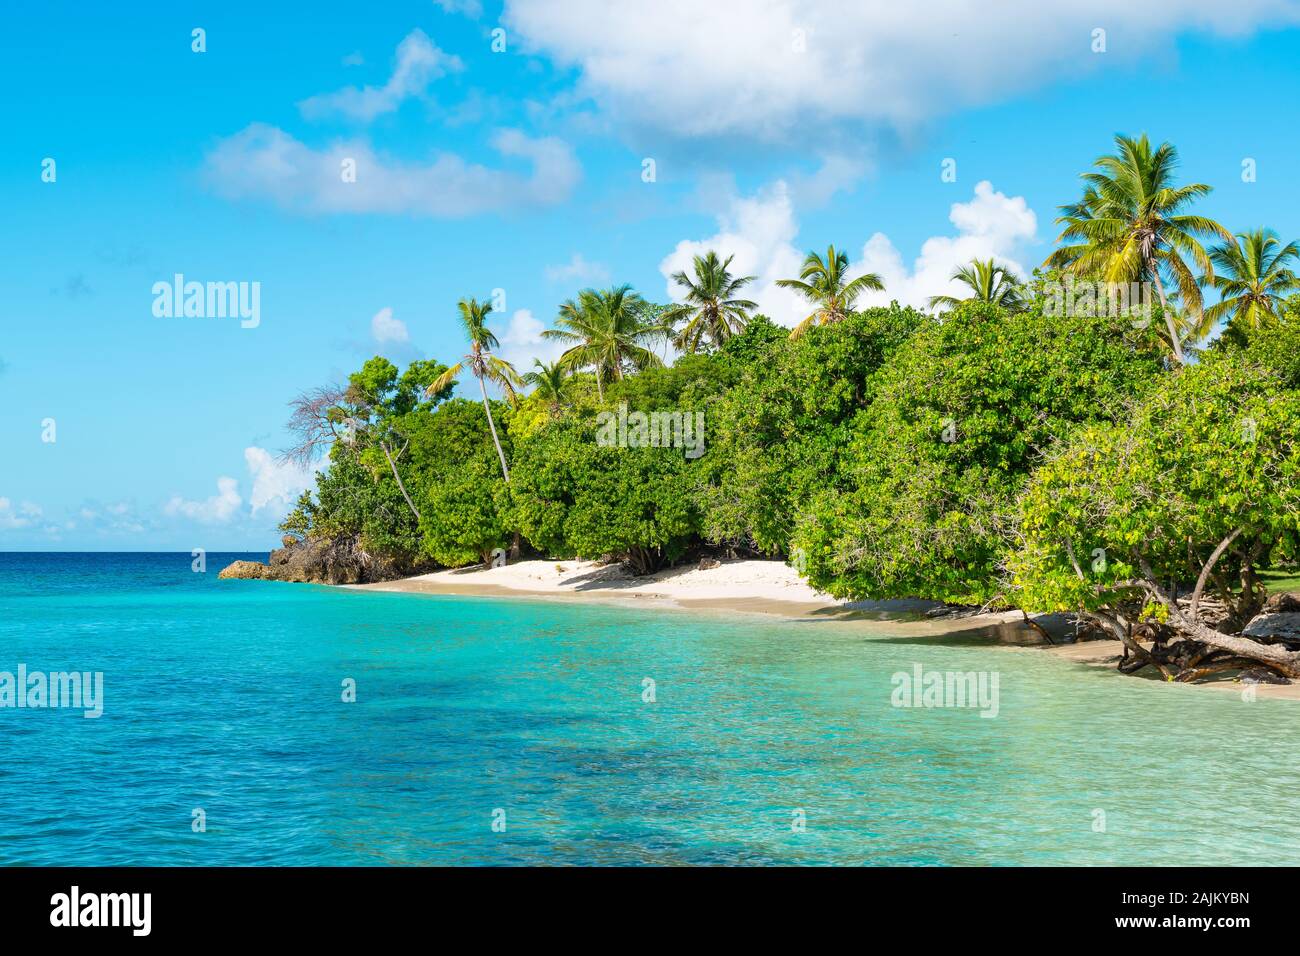 Cayo Levantado, Samana Island, Dominican Republic. Idyllic palm tree and beach landscape. Stock Photo